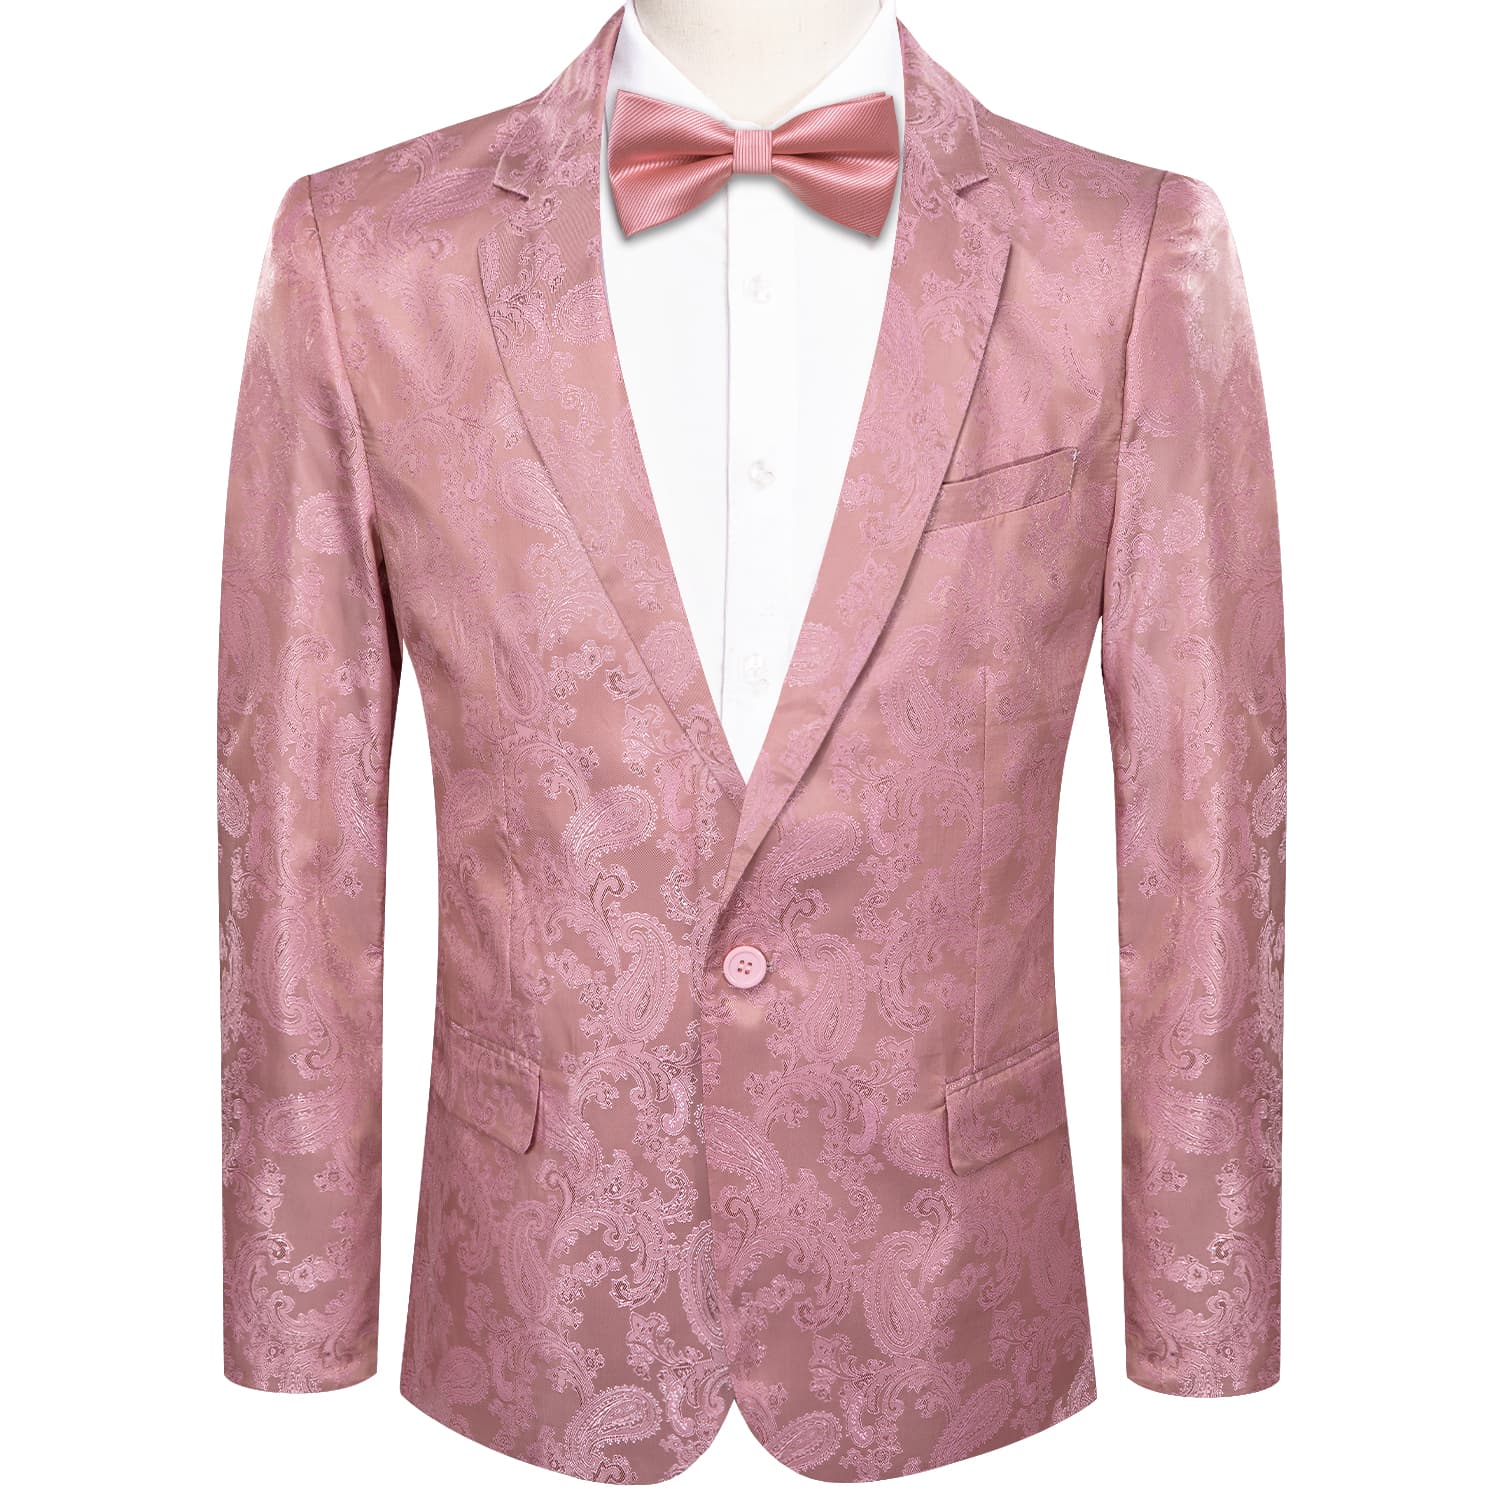  Notched Lapel Blazer Pink Men's Wedding PaisleyTop Men Suit